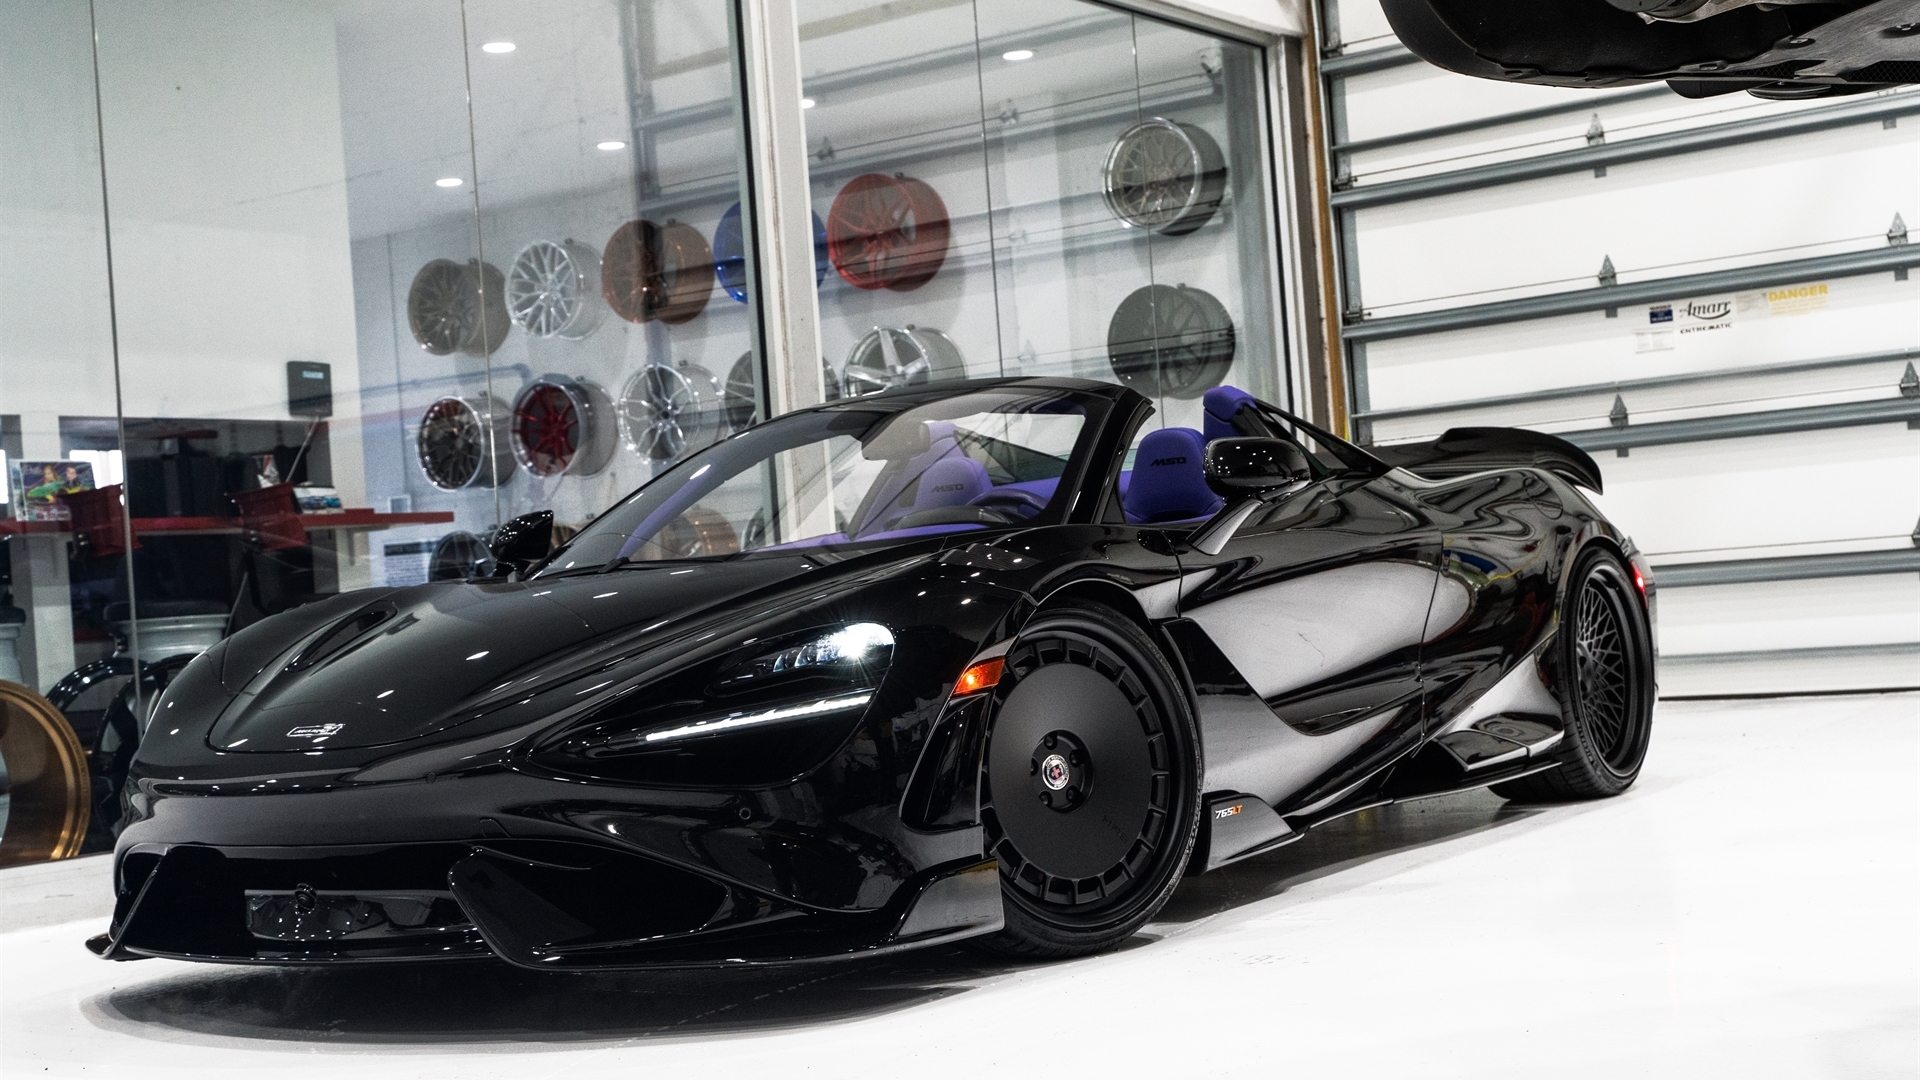 HRE 535 and 501 wheels | McLaren 765LT Onyx Black